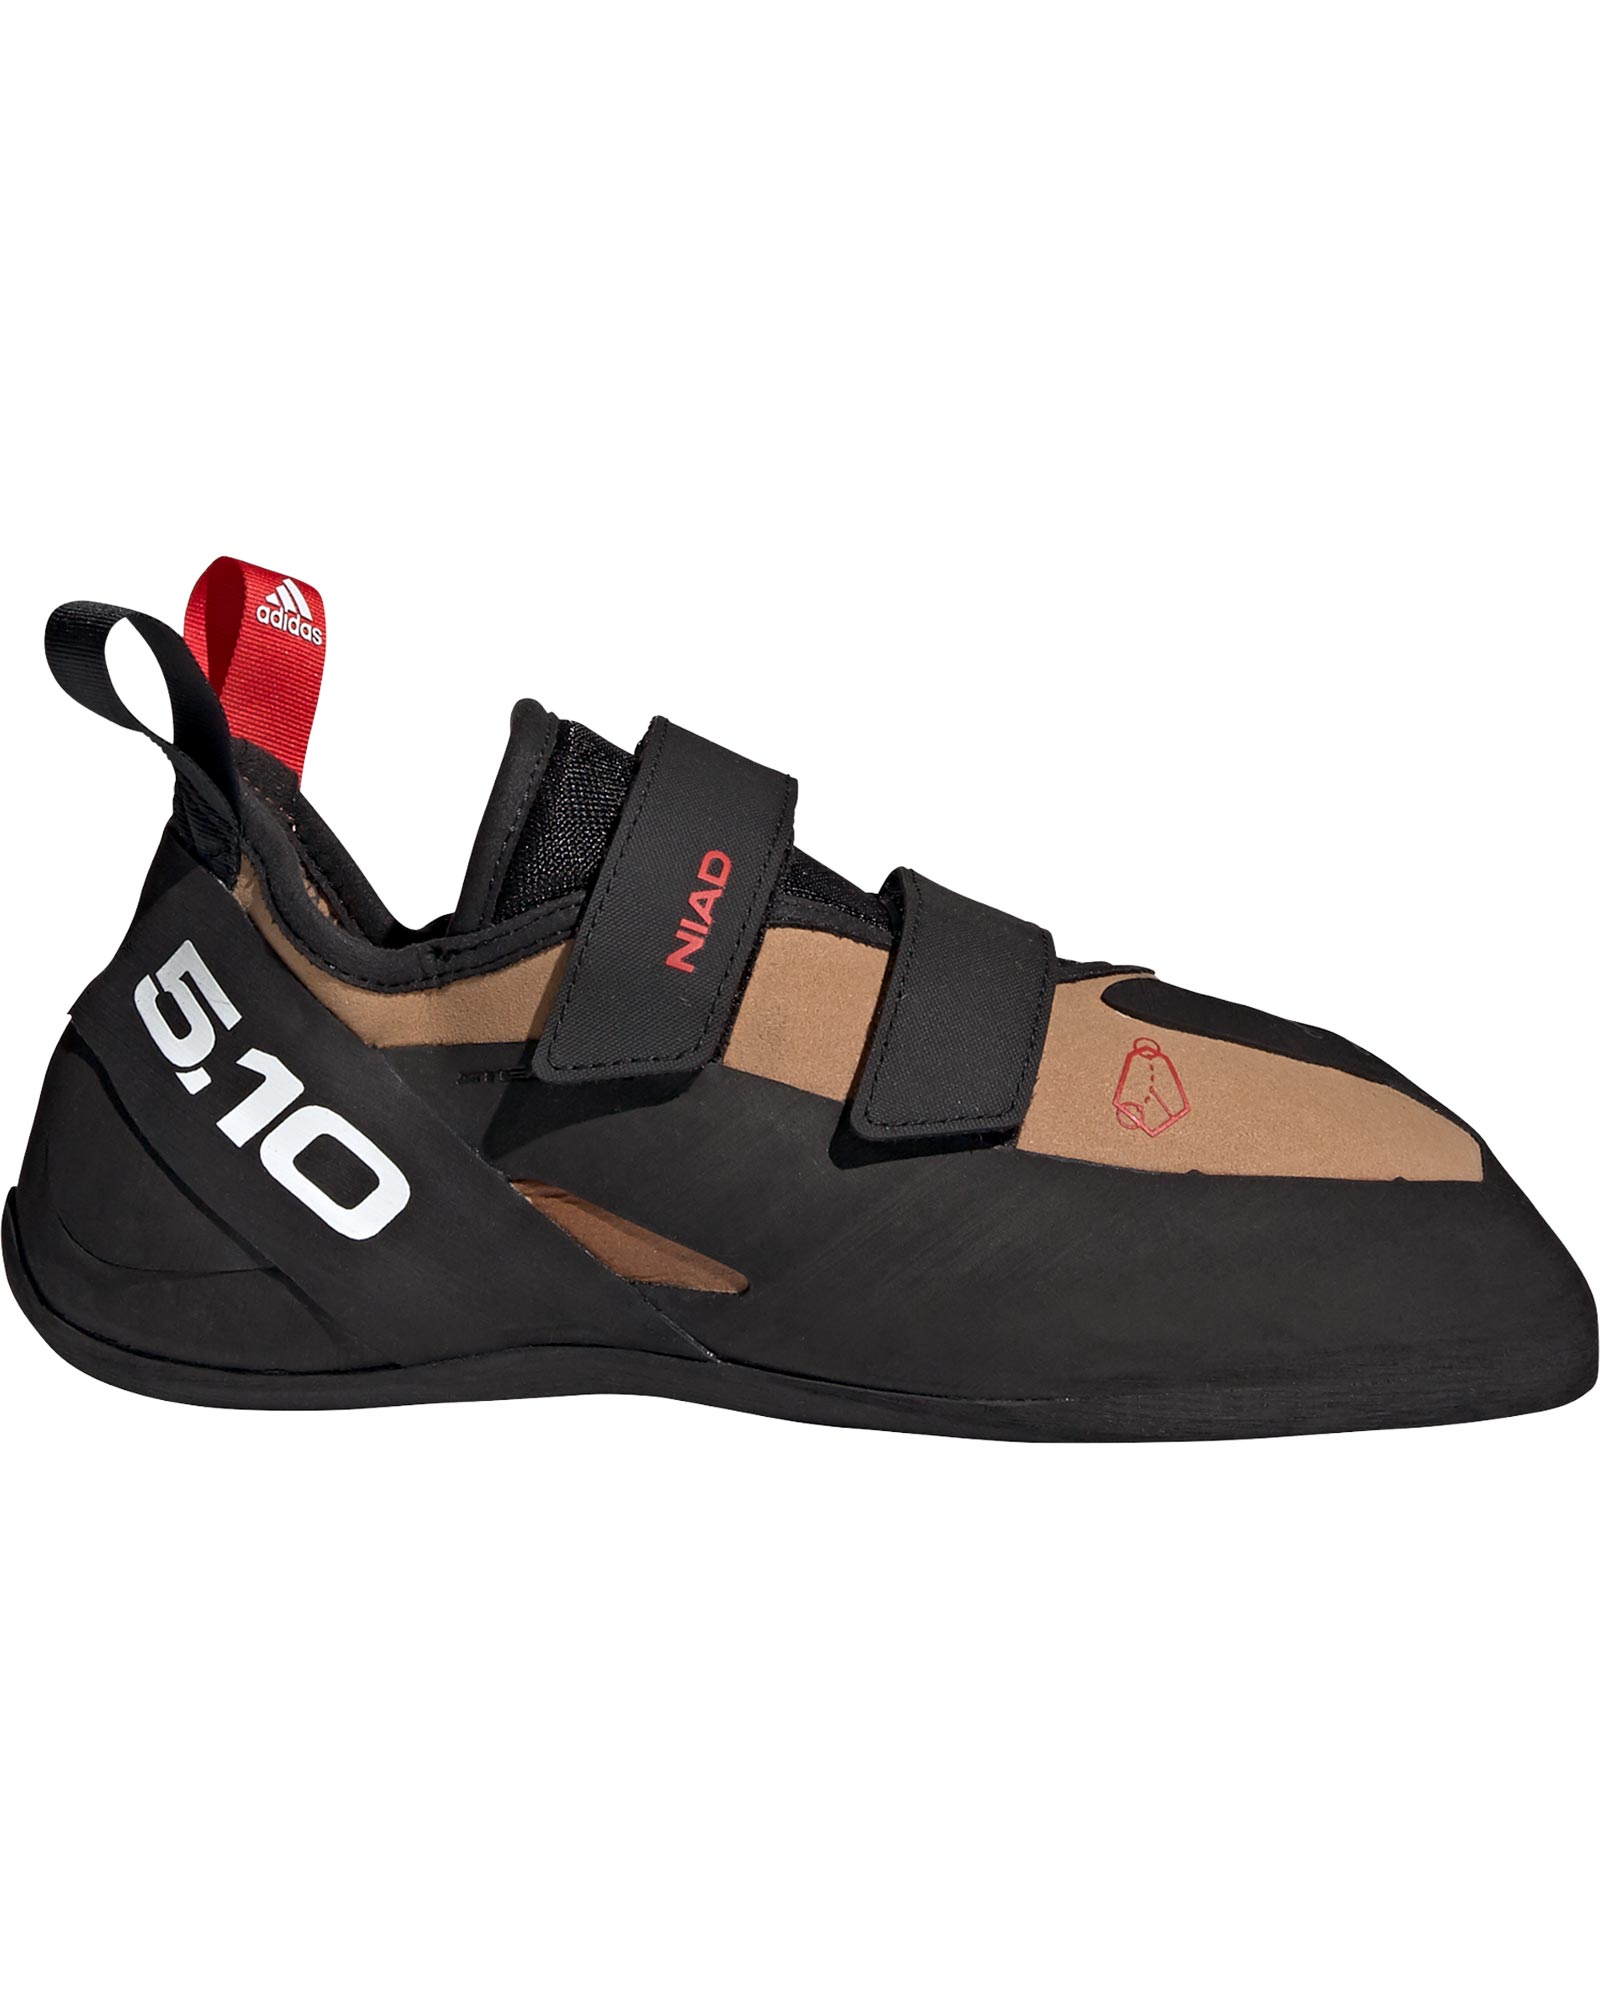 adidas Five Ten NIAD Velcro Men’s Shoes - Mesa/Core Black/Ftwr White UK 7.5